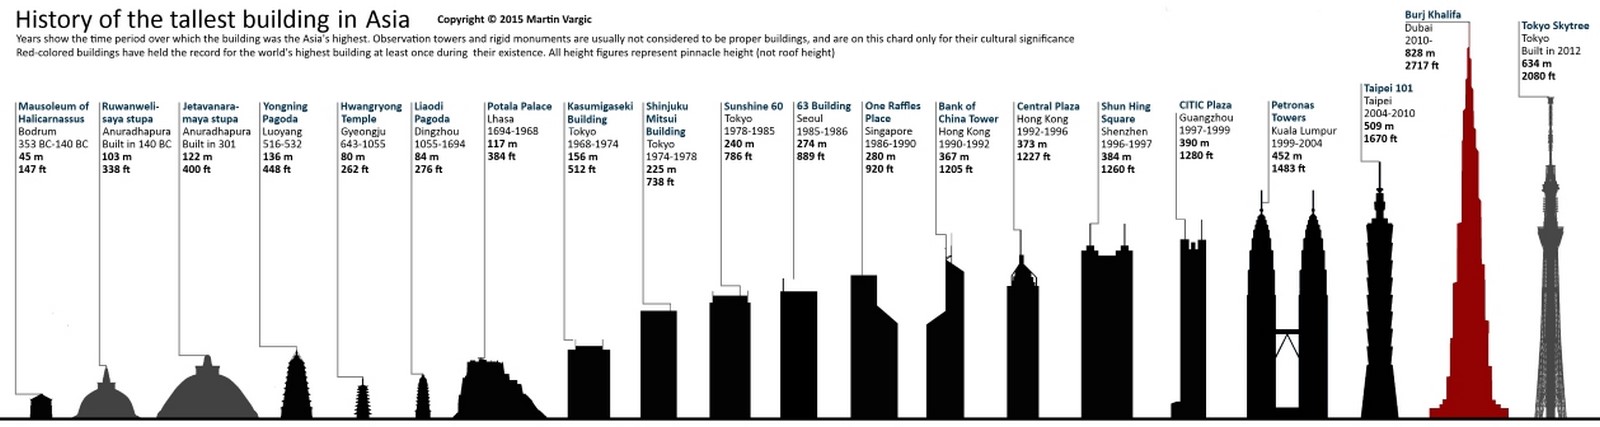 Tallest buildings: Continent wide data - Sheet2